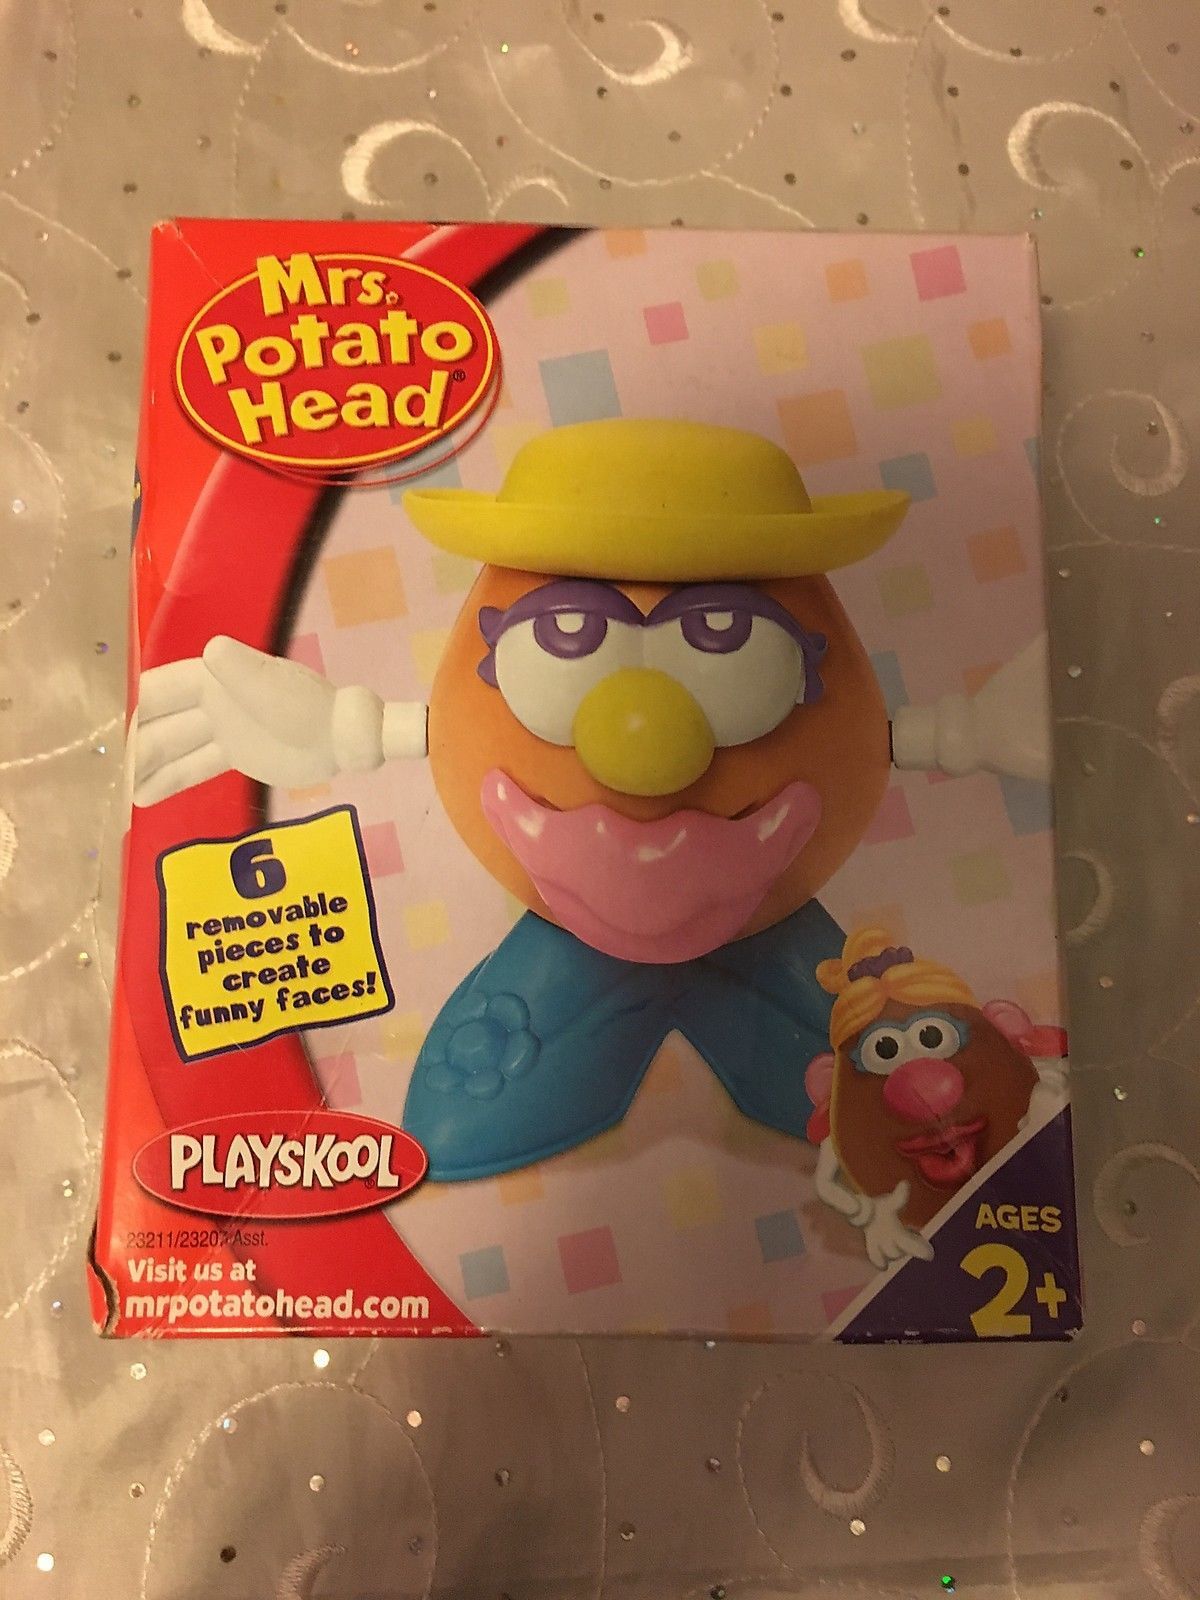 2005 Playskool Mini Mrs. Potato Head C-0010 and 50 similar items